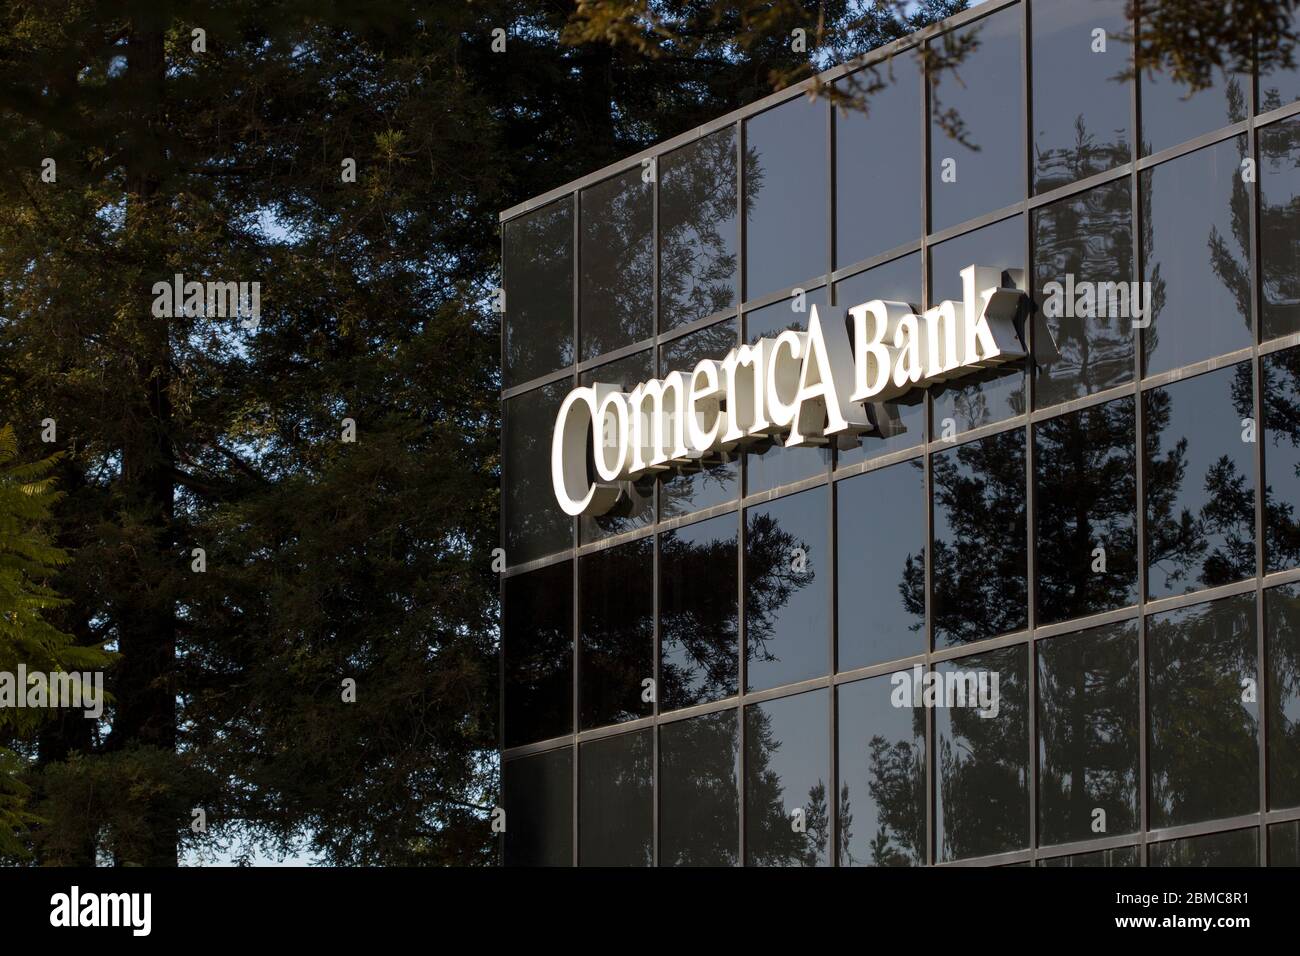 Comerica Bank San Jose Airport banking center exterior, seen on Feb 12, 2020. Stock Photo